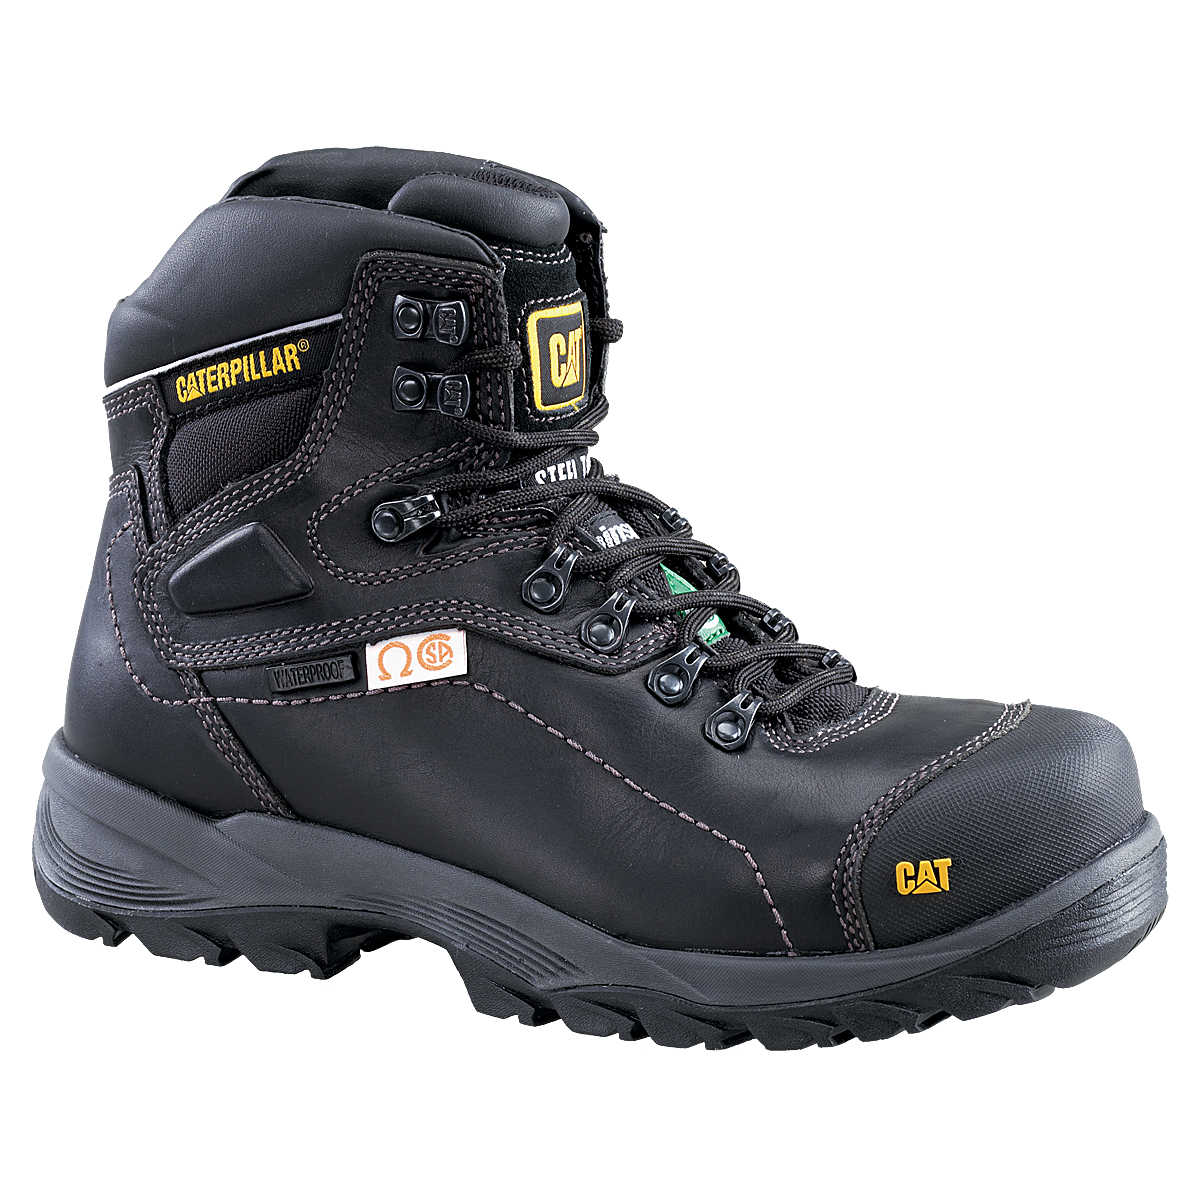 Diagnostic Hi CSA Boot (Waterproof), Black, dynamic 1